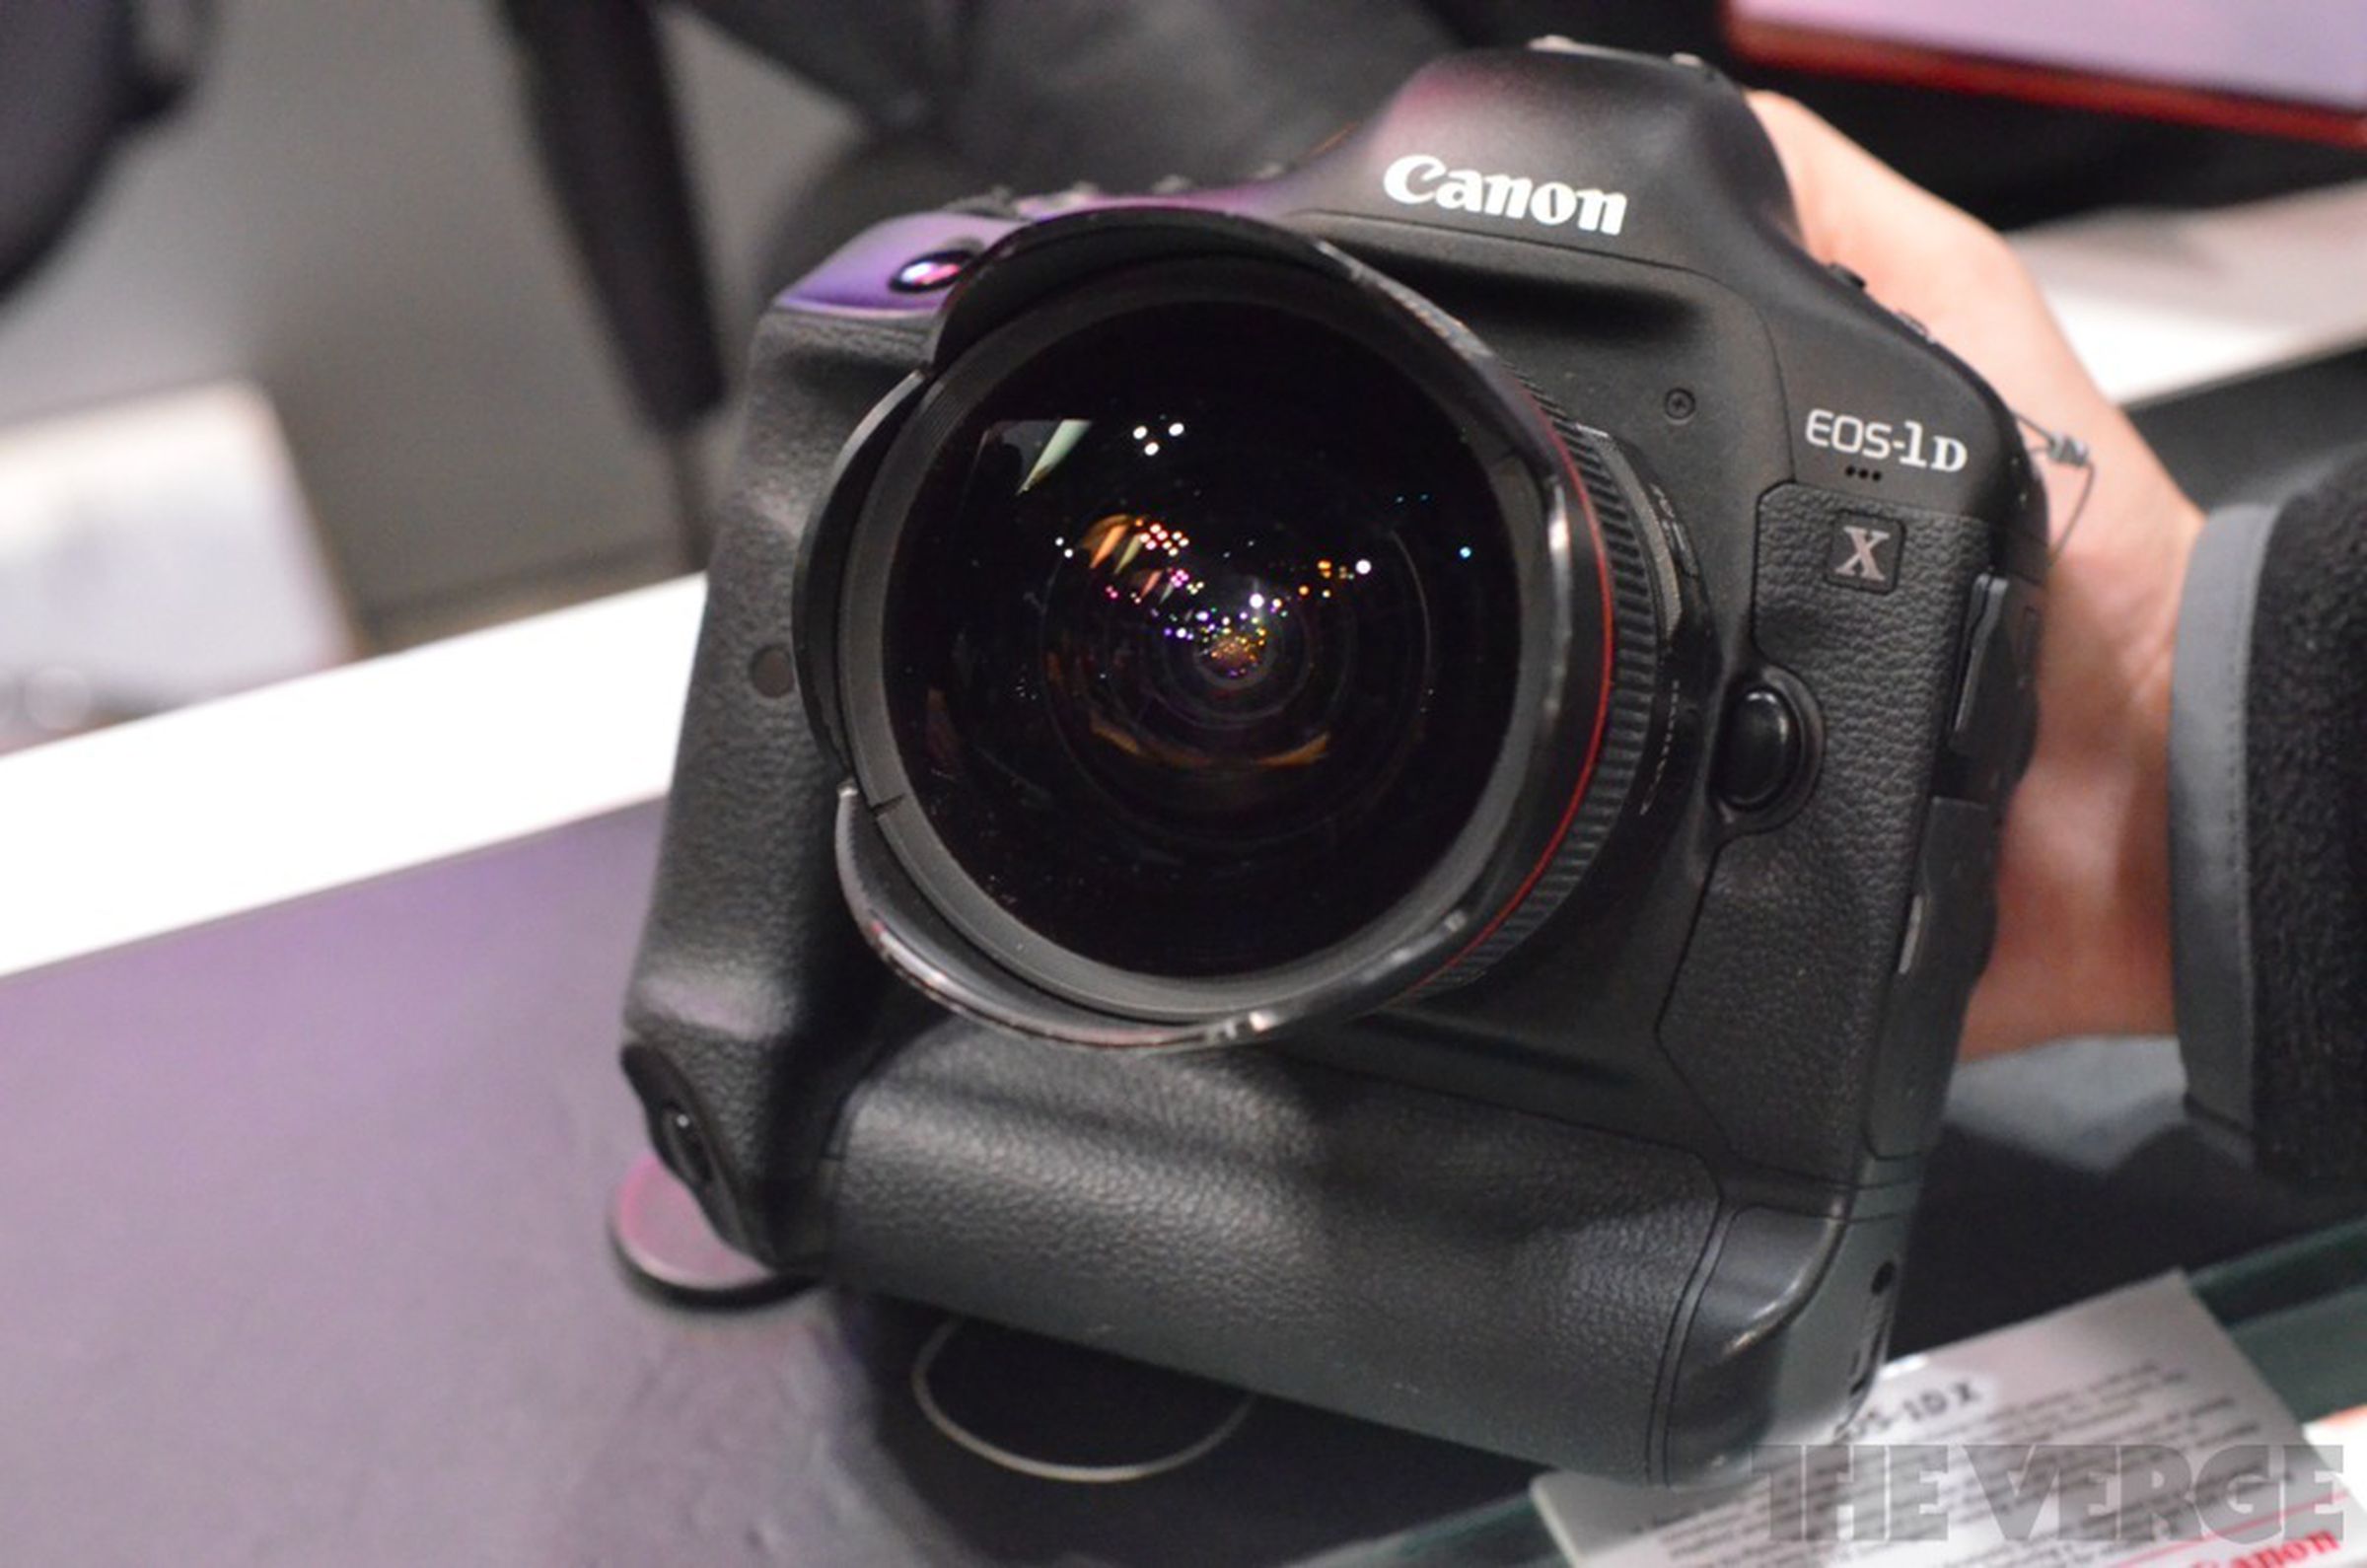 Canon EOS-1D X hands-on photos